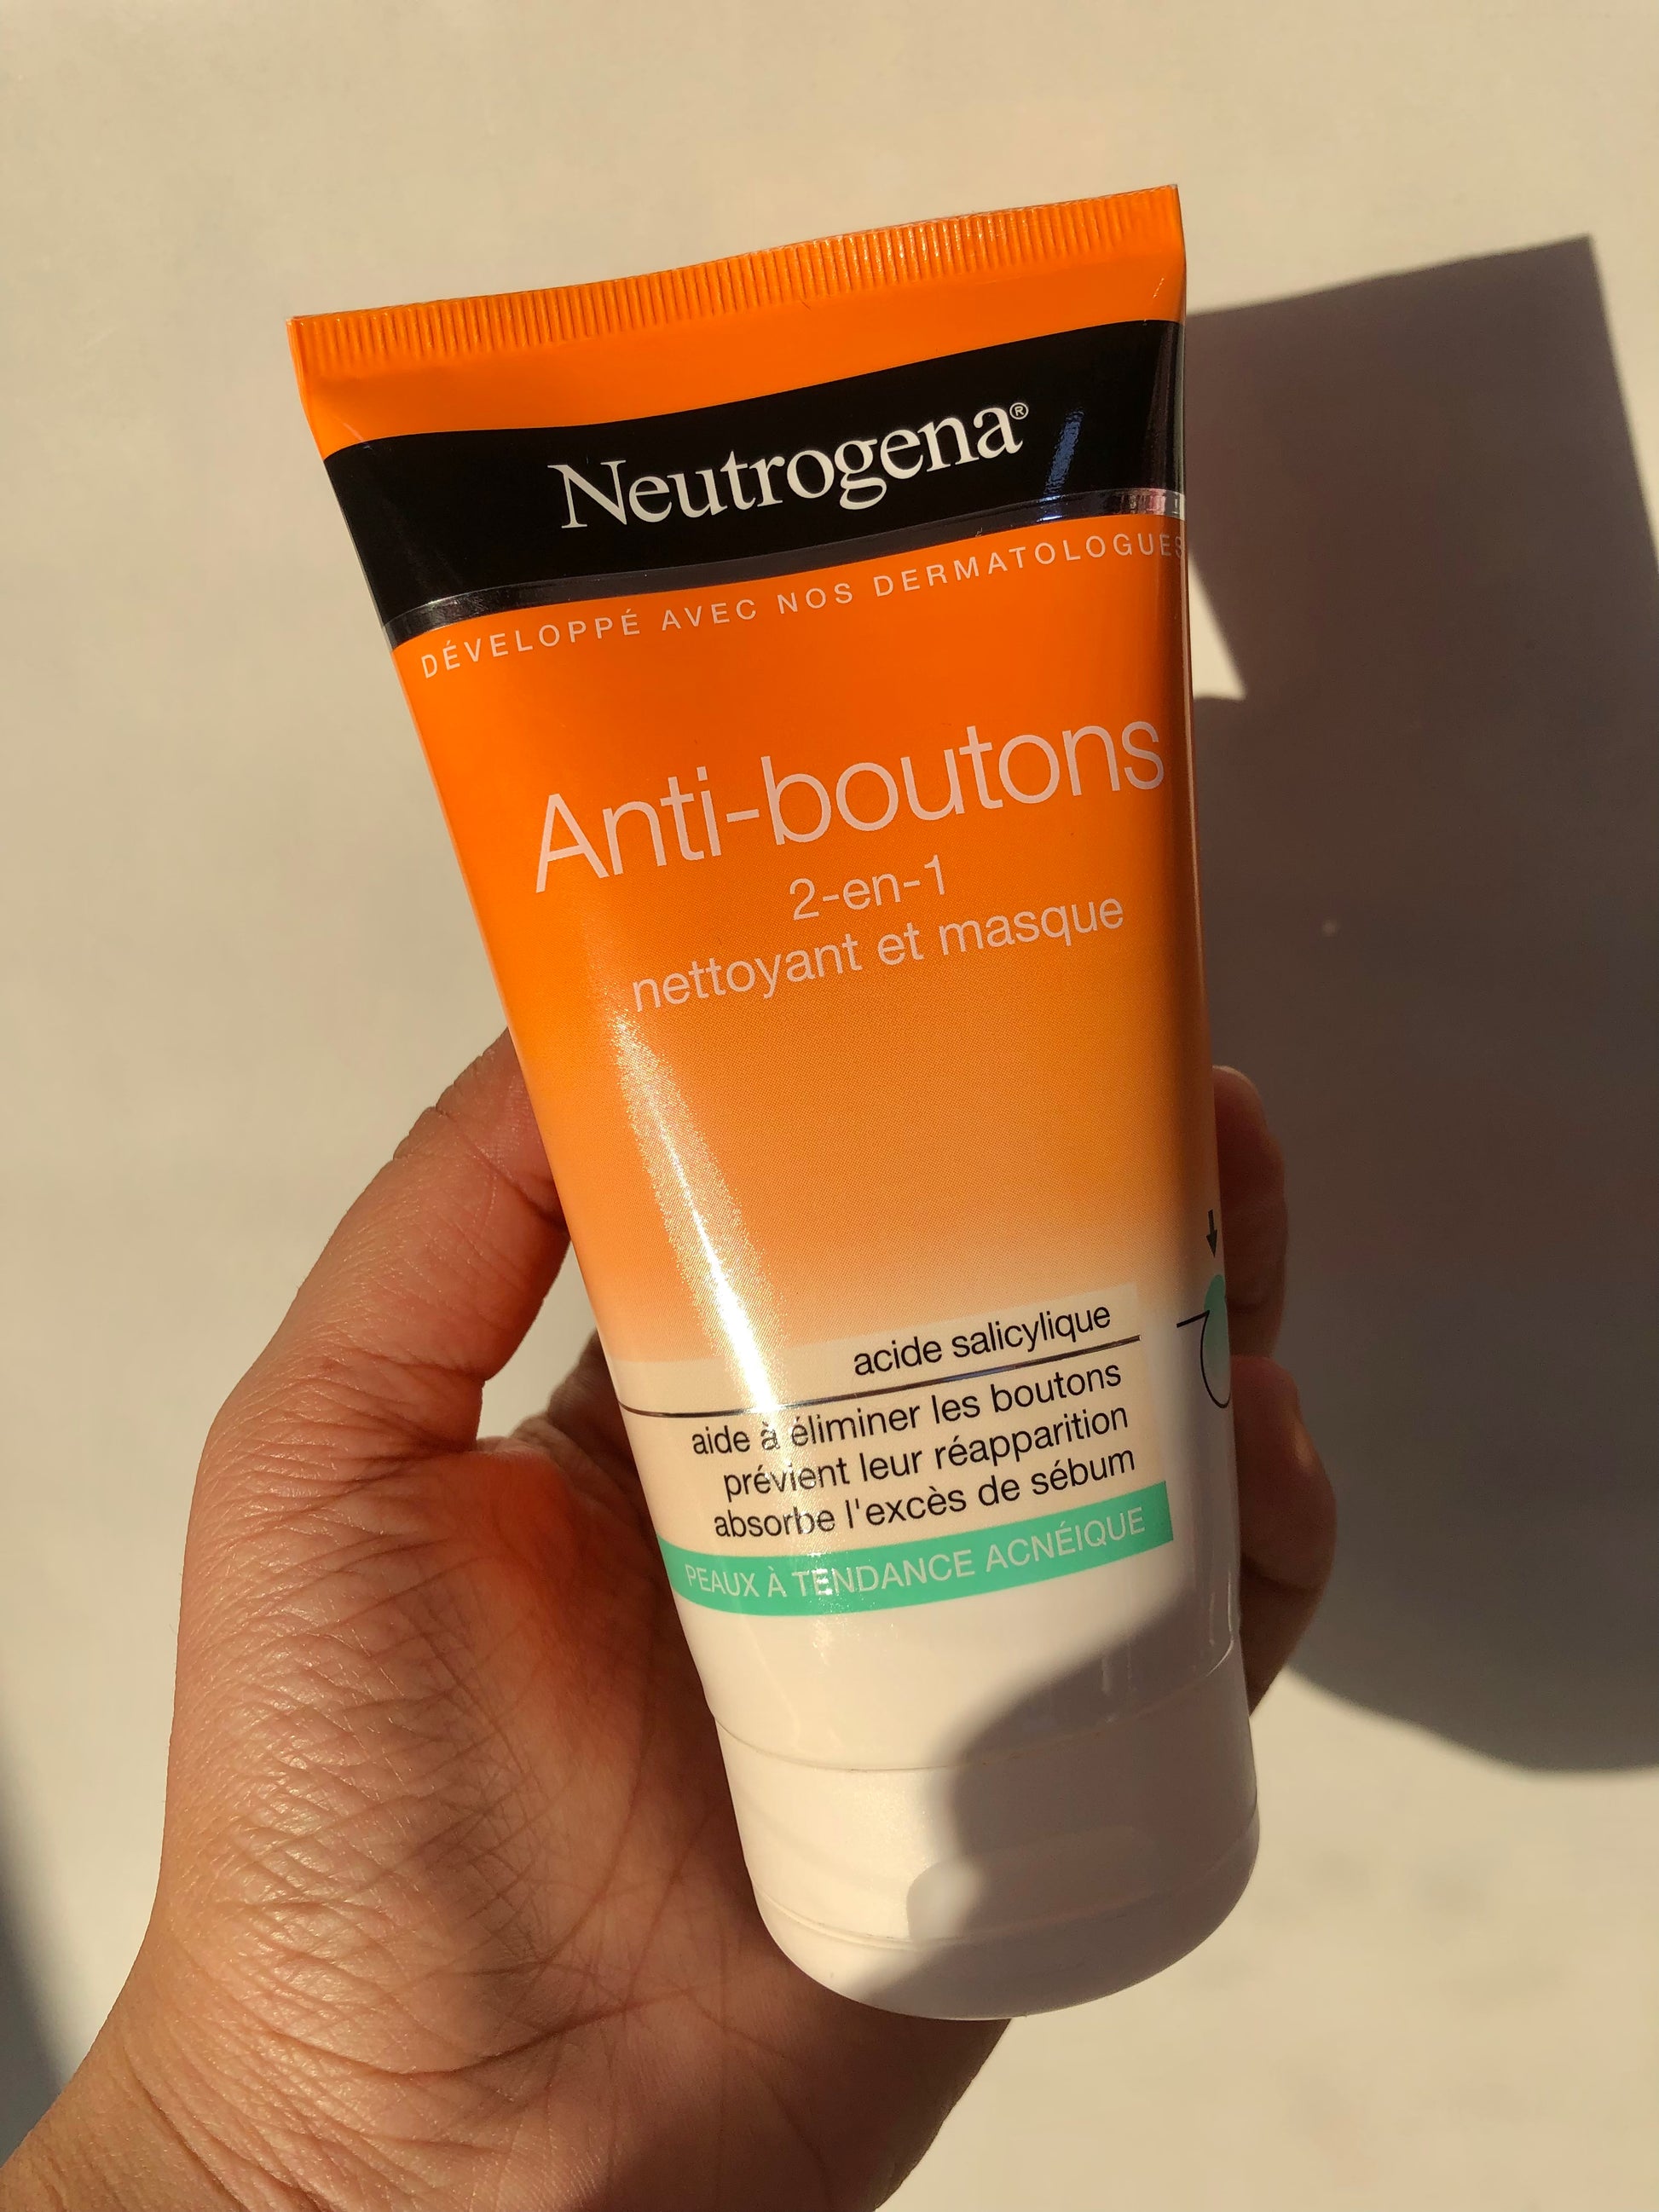 Neutrogena Anti-boutons : 2-en-1 nettoyant et masque 150ml